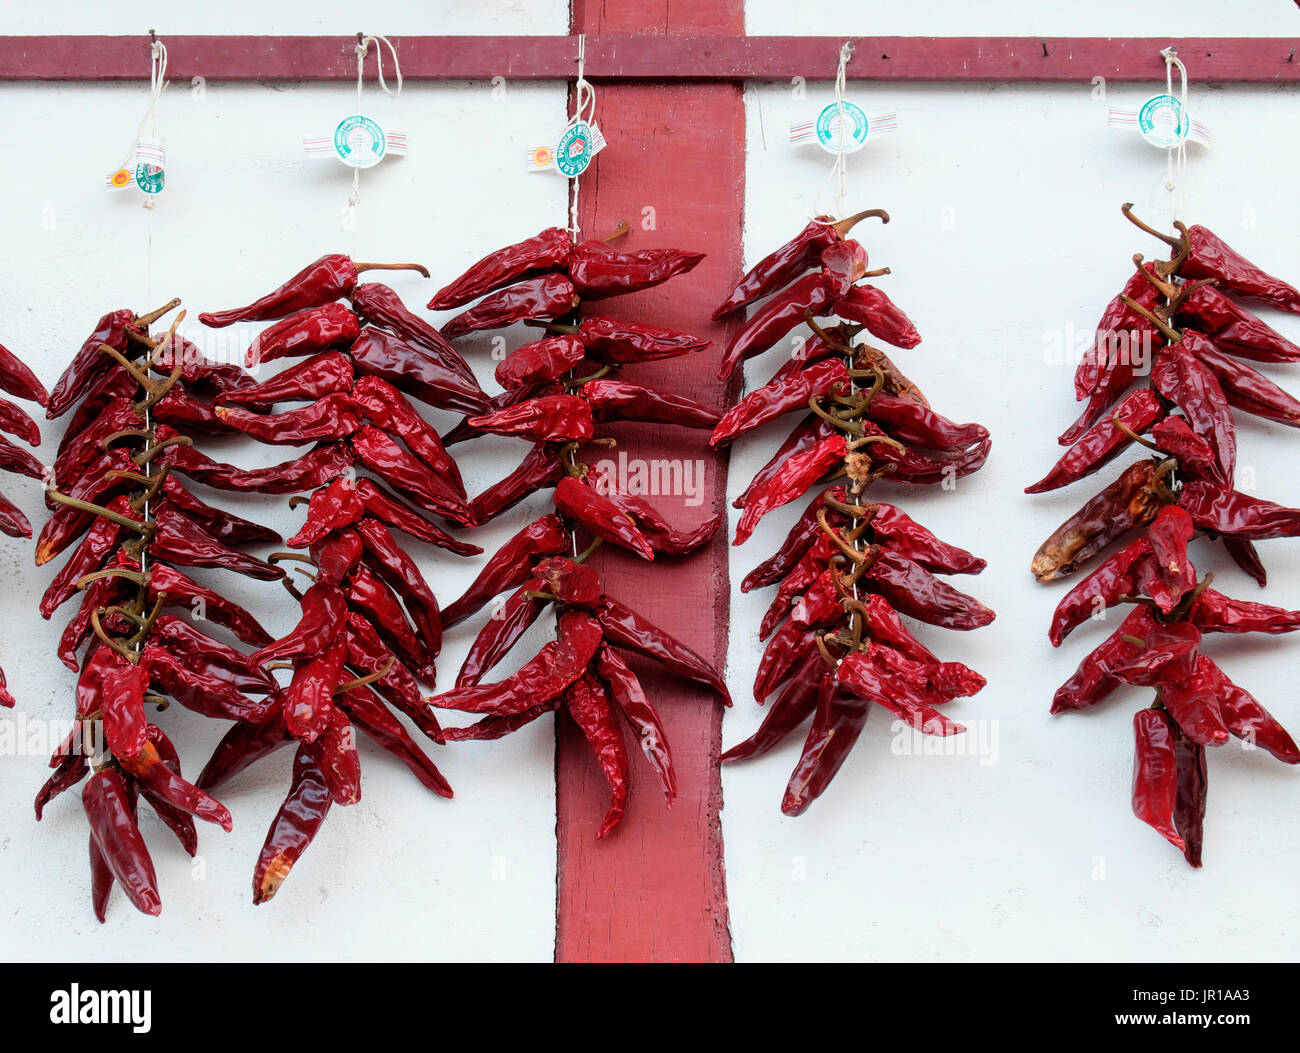 Traditionelle Chili trocknen, Espelette Pfeffer, Espelette, Baskisches  Land, Frankreich Stockfotografie - Alamy